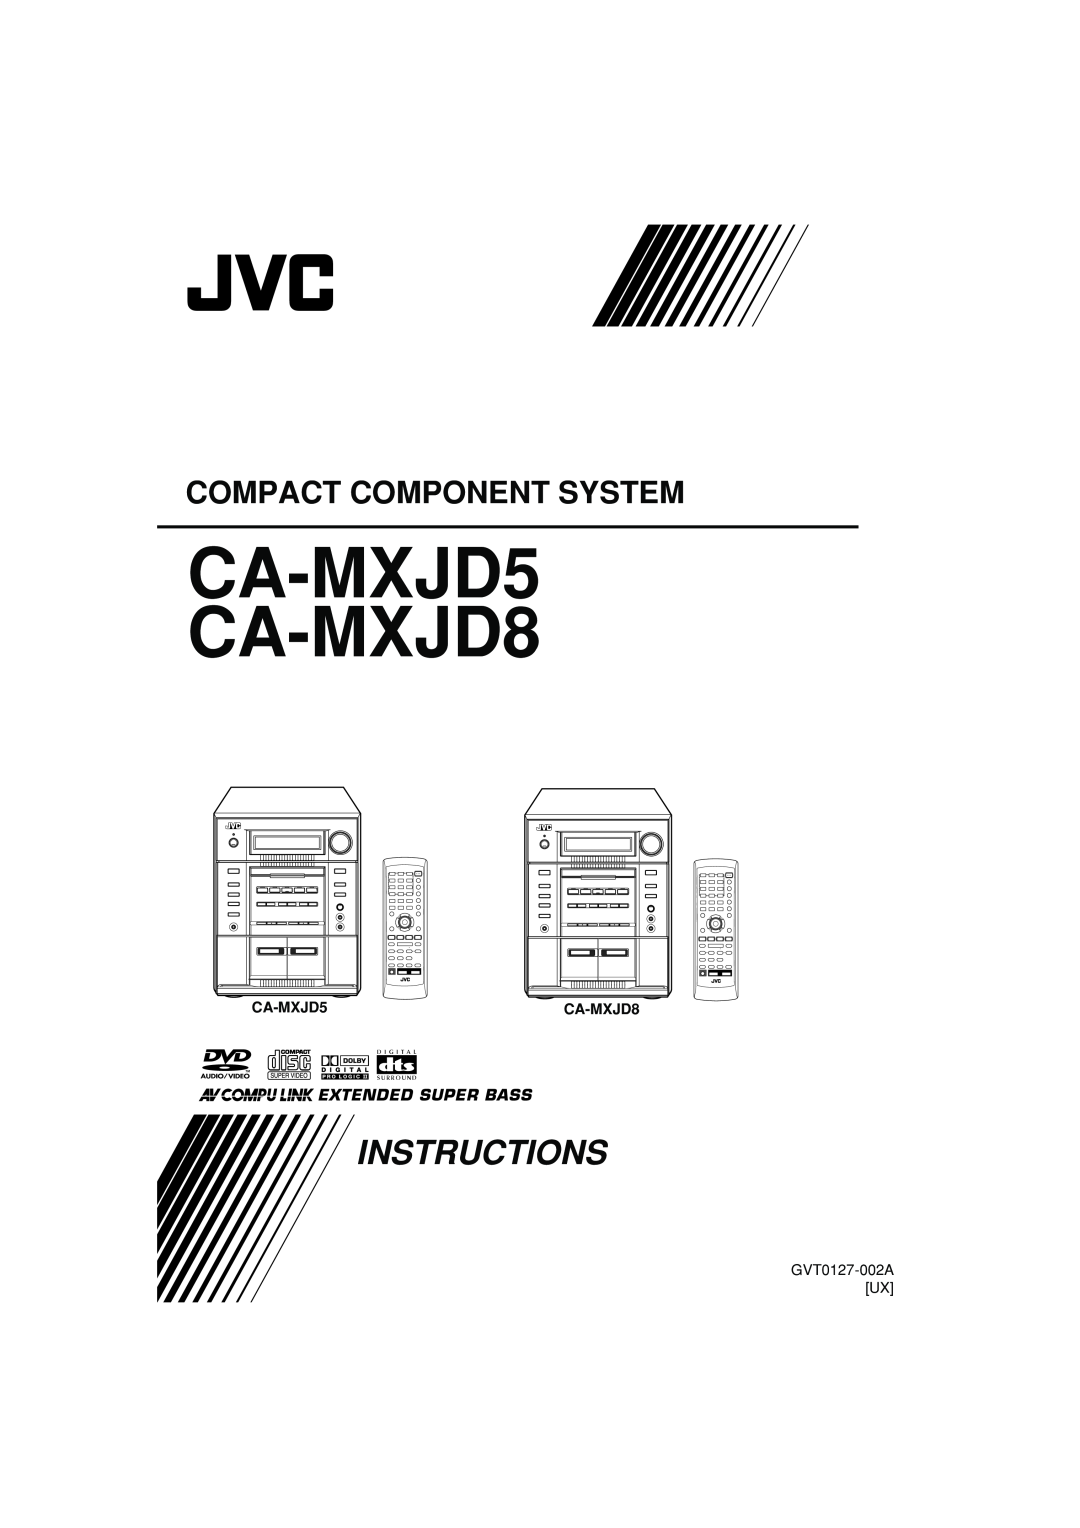 JVC CA-MXJD8UW manual CA-MXJD5 CA-MXJD8, Instructions, Compact Component System, Extended Super Bass, GVT0127-002AUX 